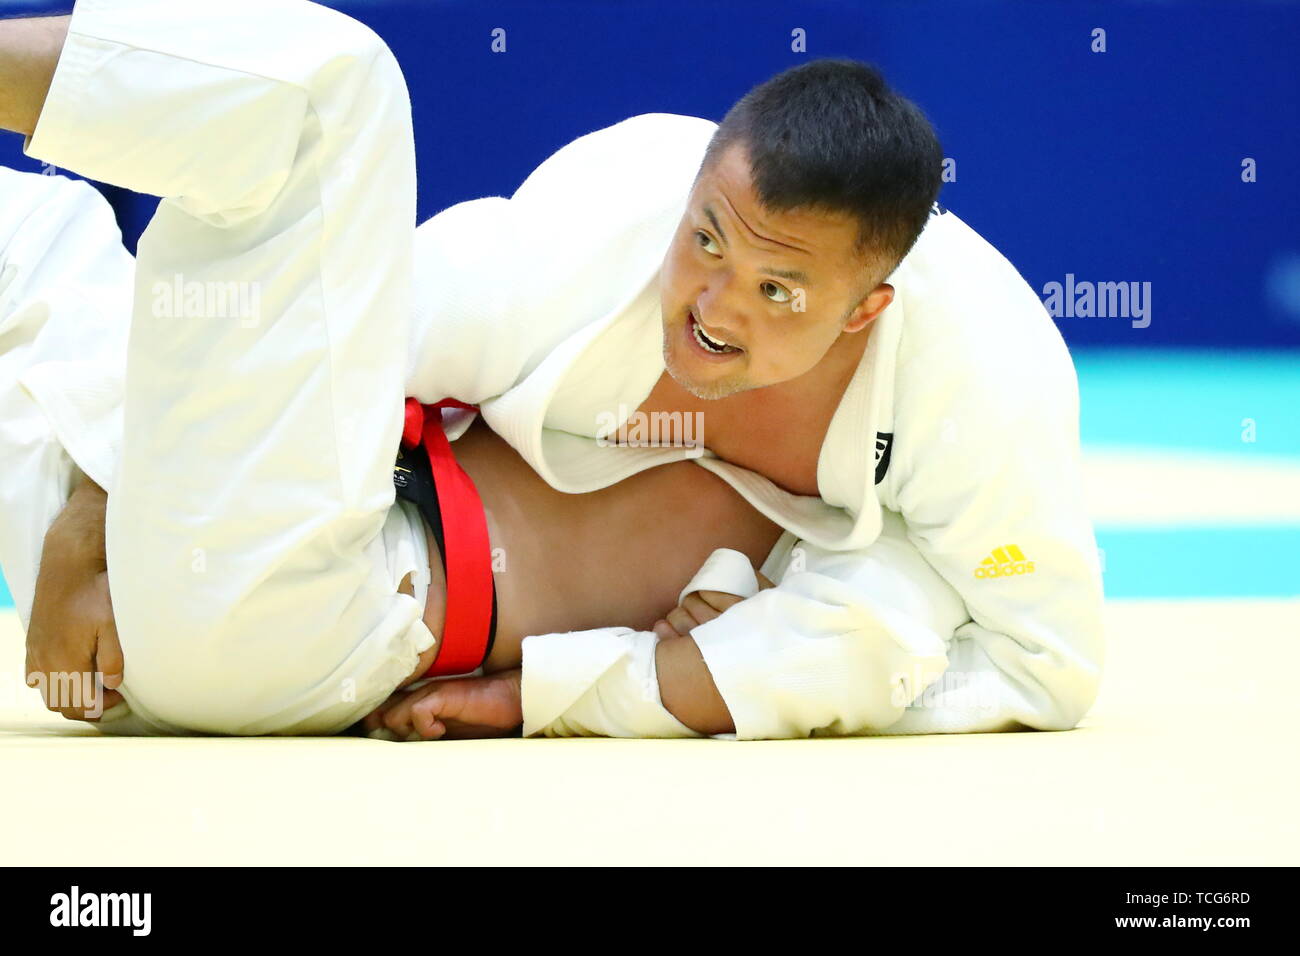 Takasaki Arena, Gunma, Japan. 8th June, 2019. Keiji Suzuki, JUNE 8, 2019 - Judo : The 69th All Japan Businessmen's Judo Team Competition, Men's division 3 at Takasaki Arena, Gunma, Japan. Credit: Naoki Nishimura/AFLO SPORT/Alamy Live News Stock Photo